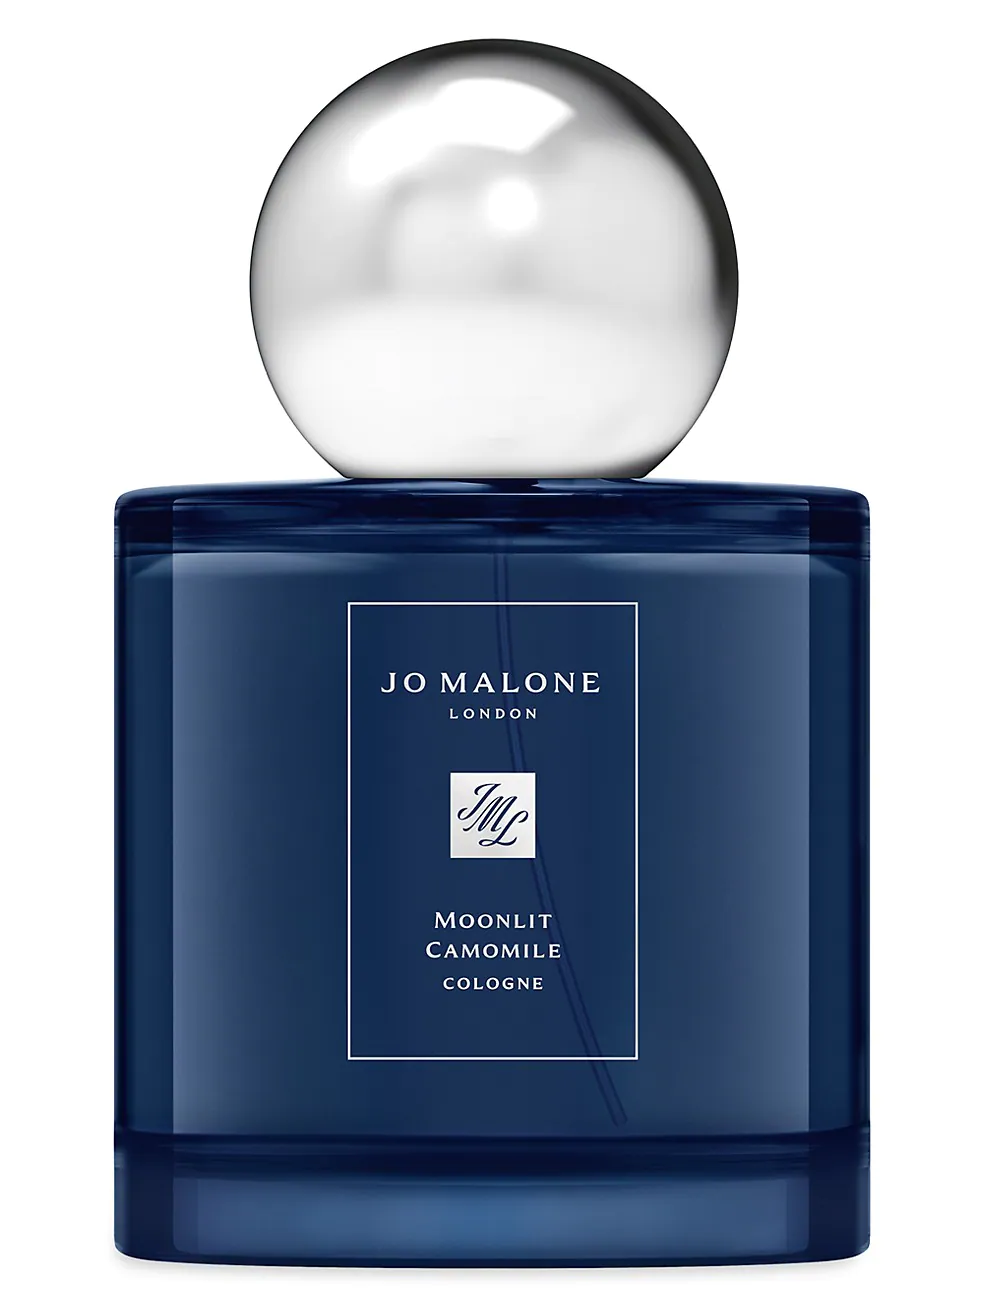 Jo Malone London Cologne - beauty - beauty products - perfume - cologne